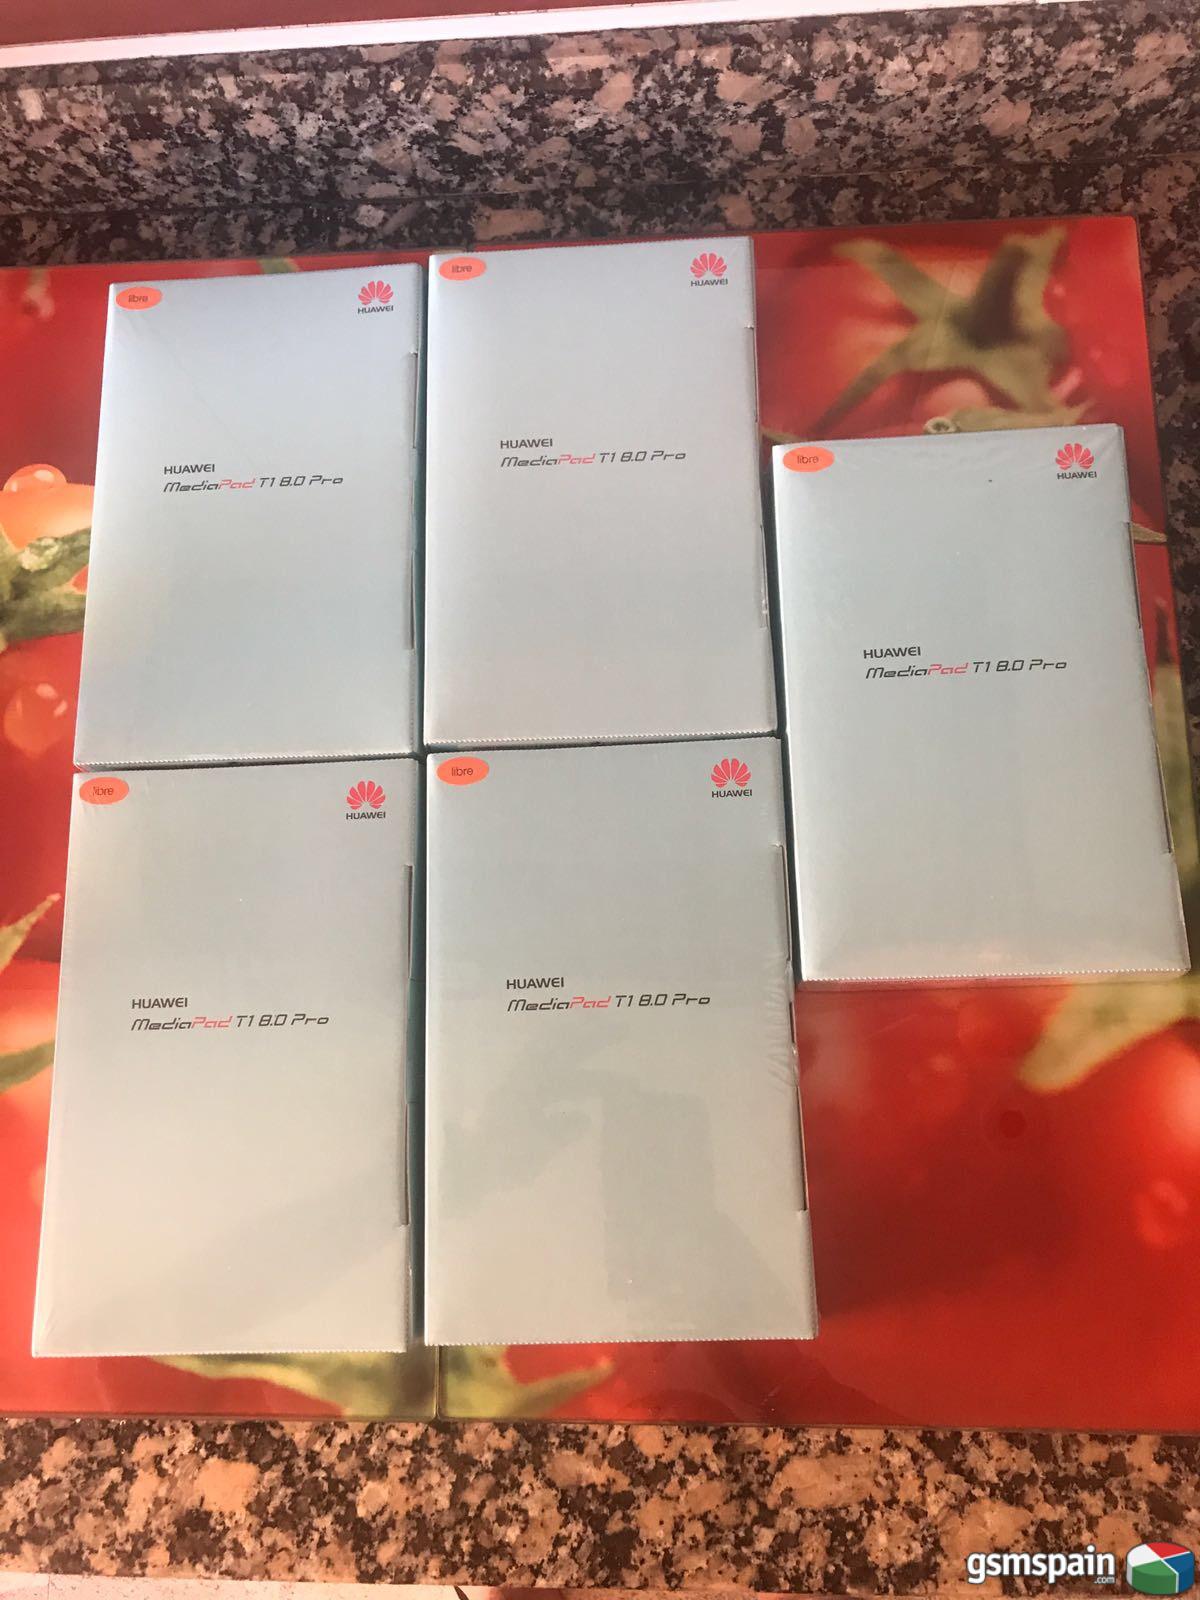 [VENDO] Vendo 5 unidades Huawei mediapad t1 8.0 pro 4g